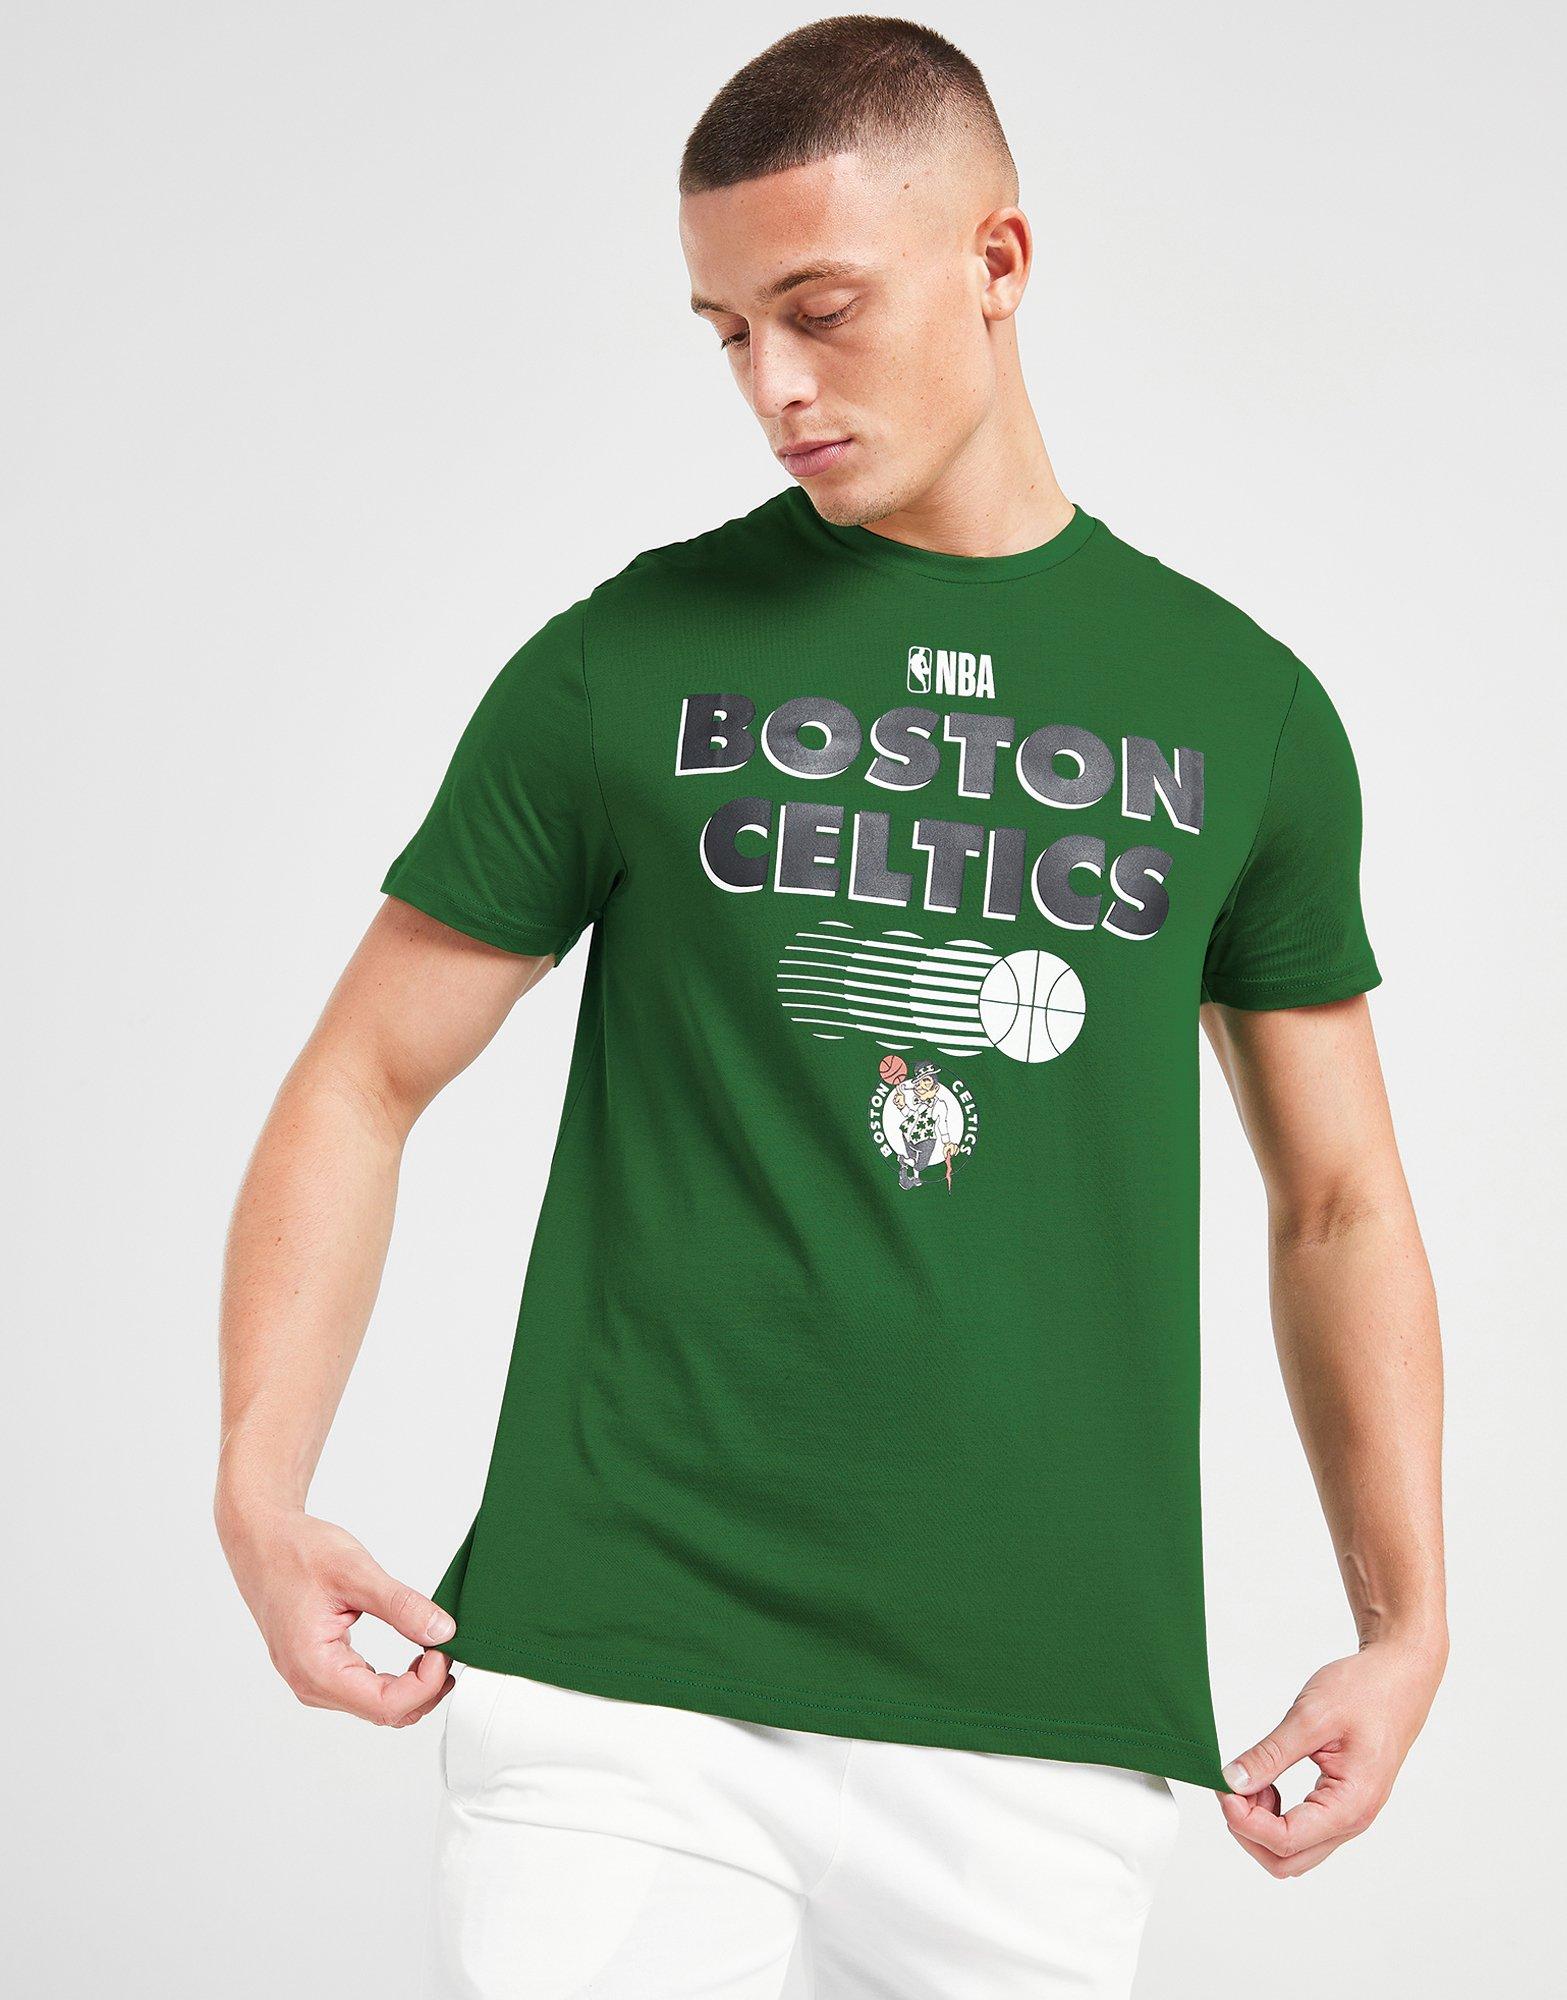 Boston Celtics Sweatshirt Boys Small Kids Youth Hoodie NBA